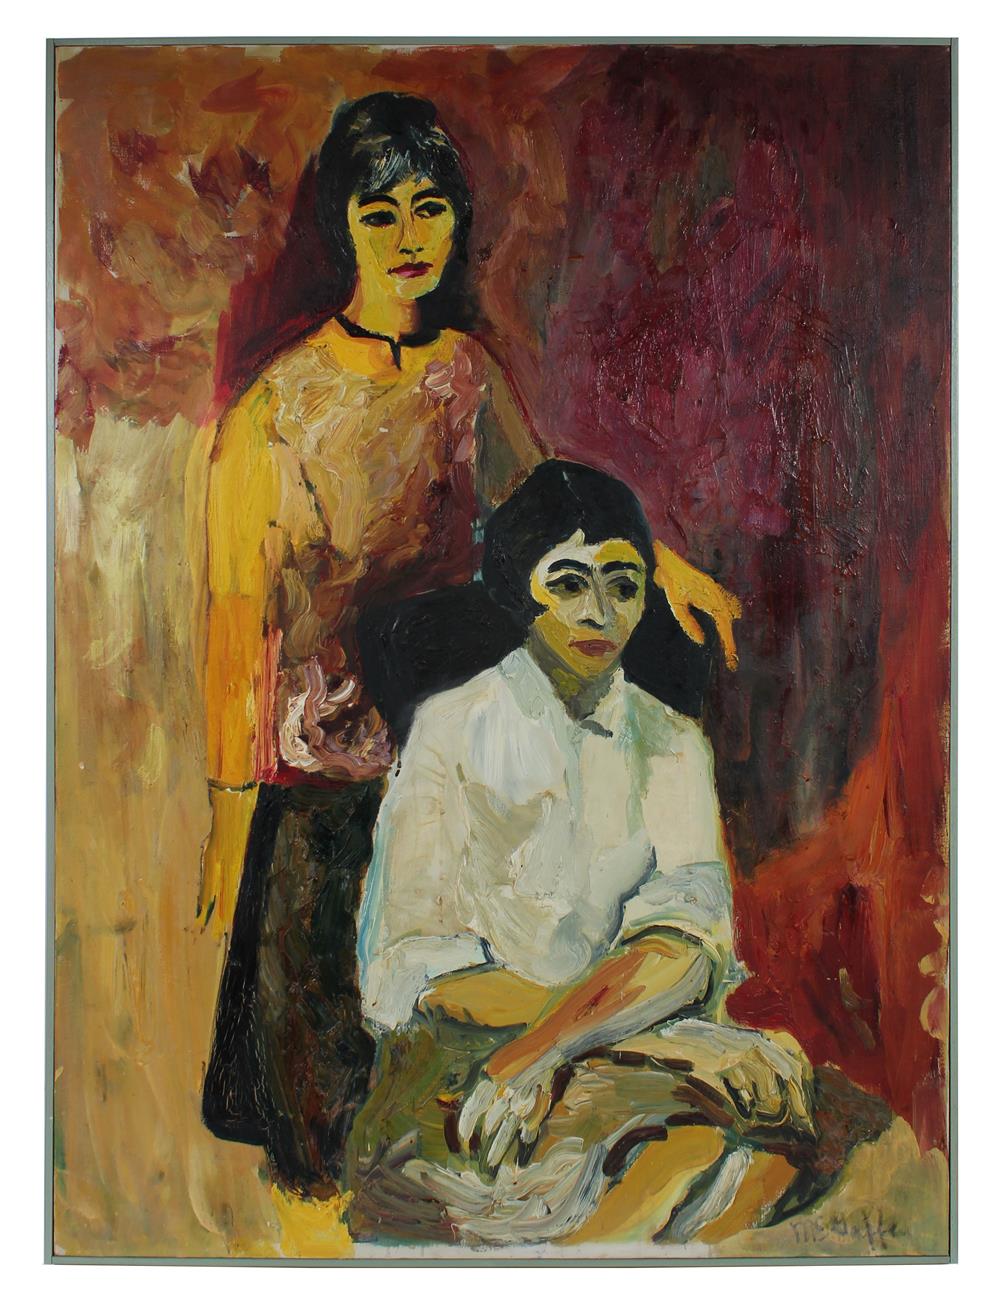 &lt;i&gt;Clara &amp; Theodora&lt;/i&gt;&lt;br&gt;1963 Oil on Canvas&lt;br&gt;&lt;br&gt;#13267